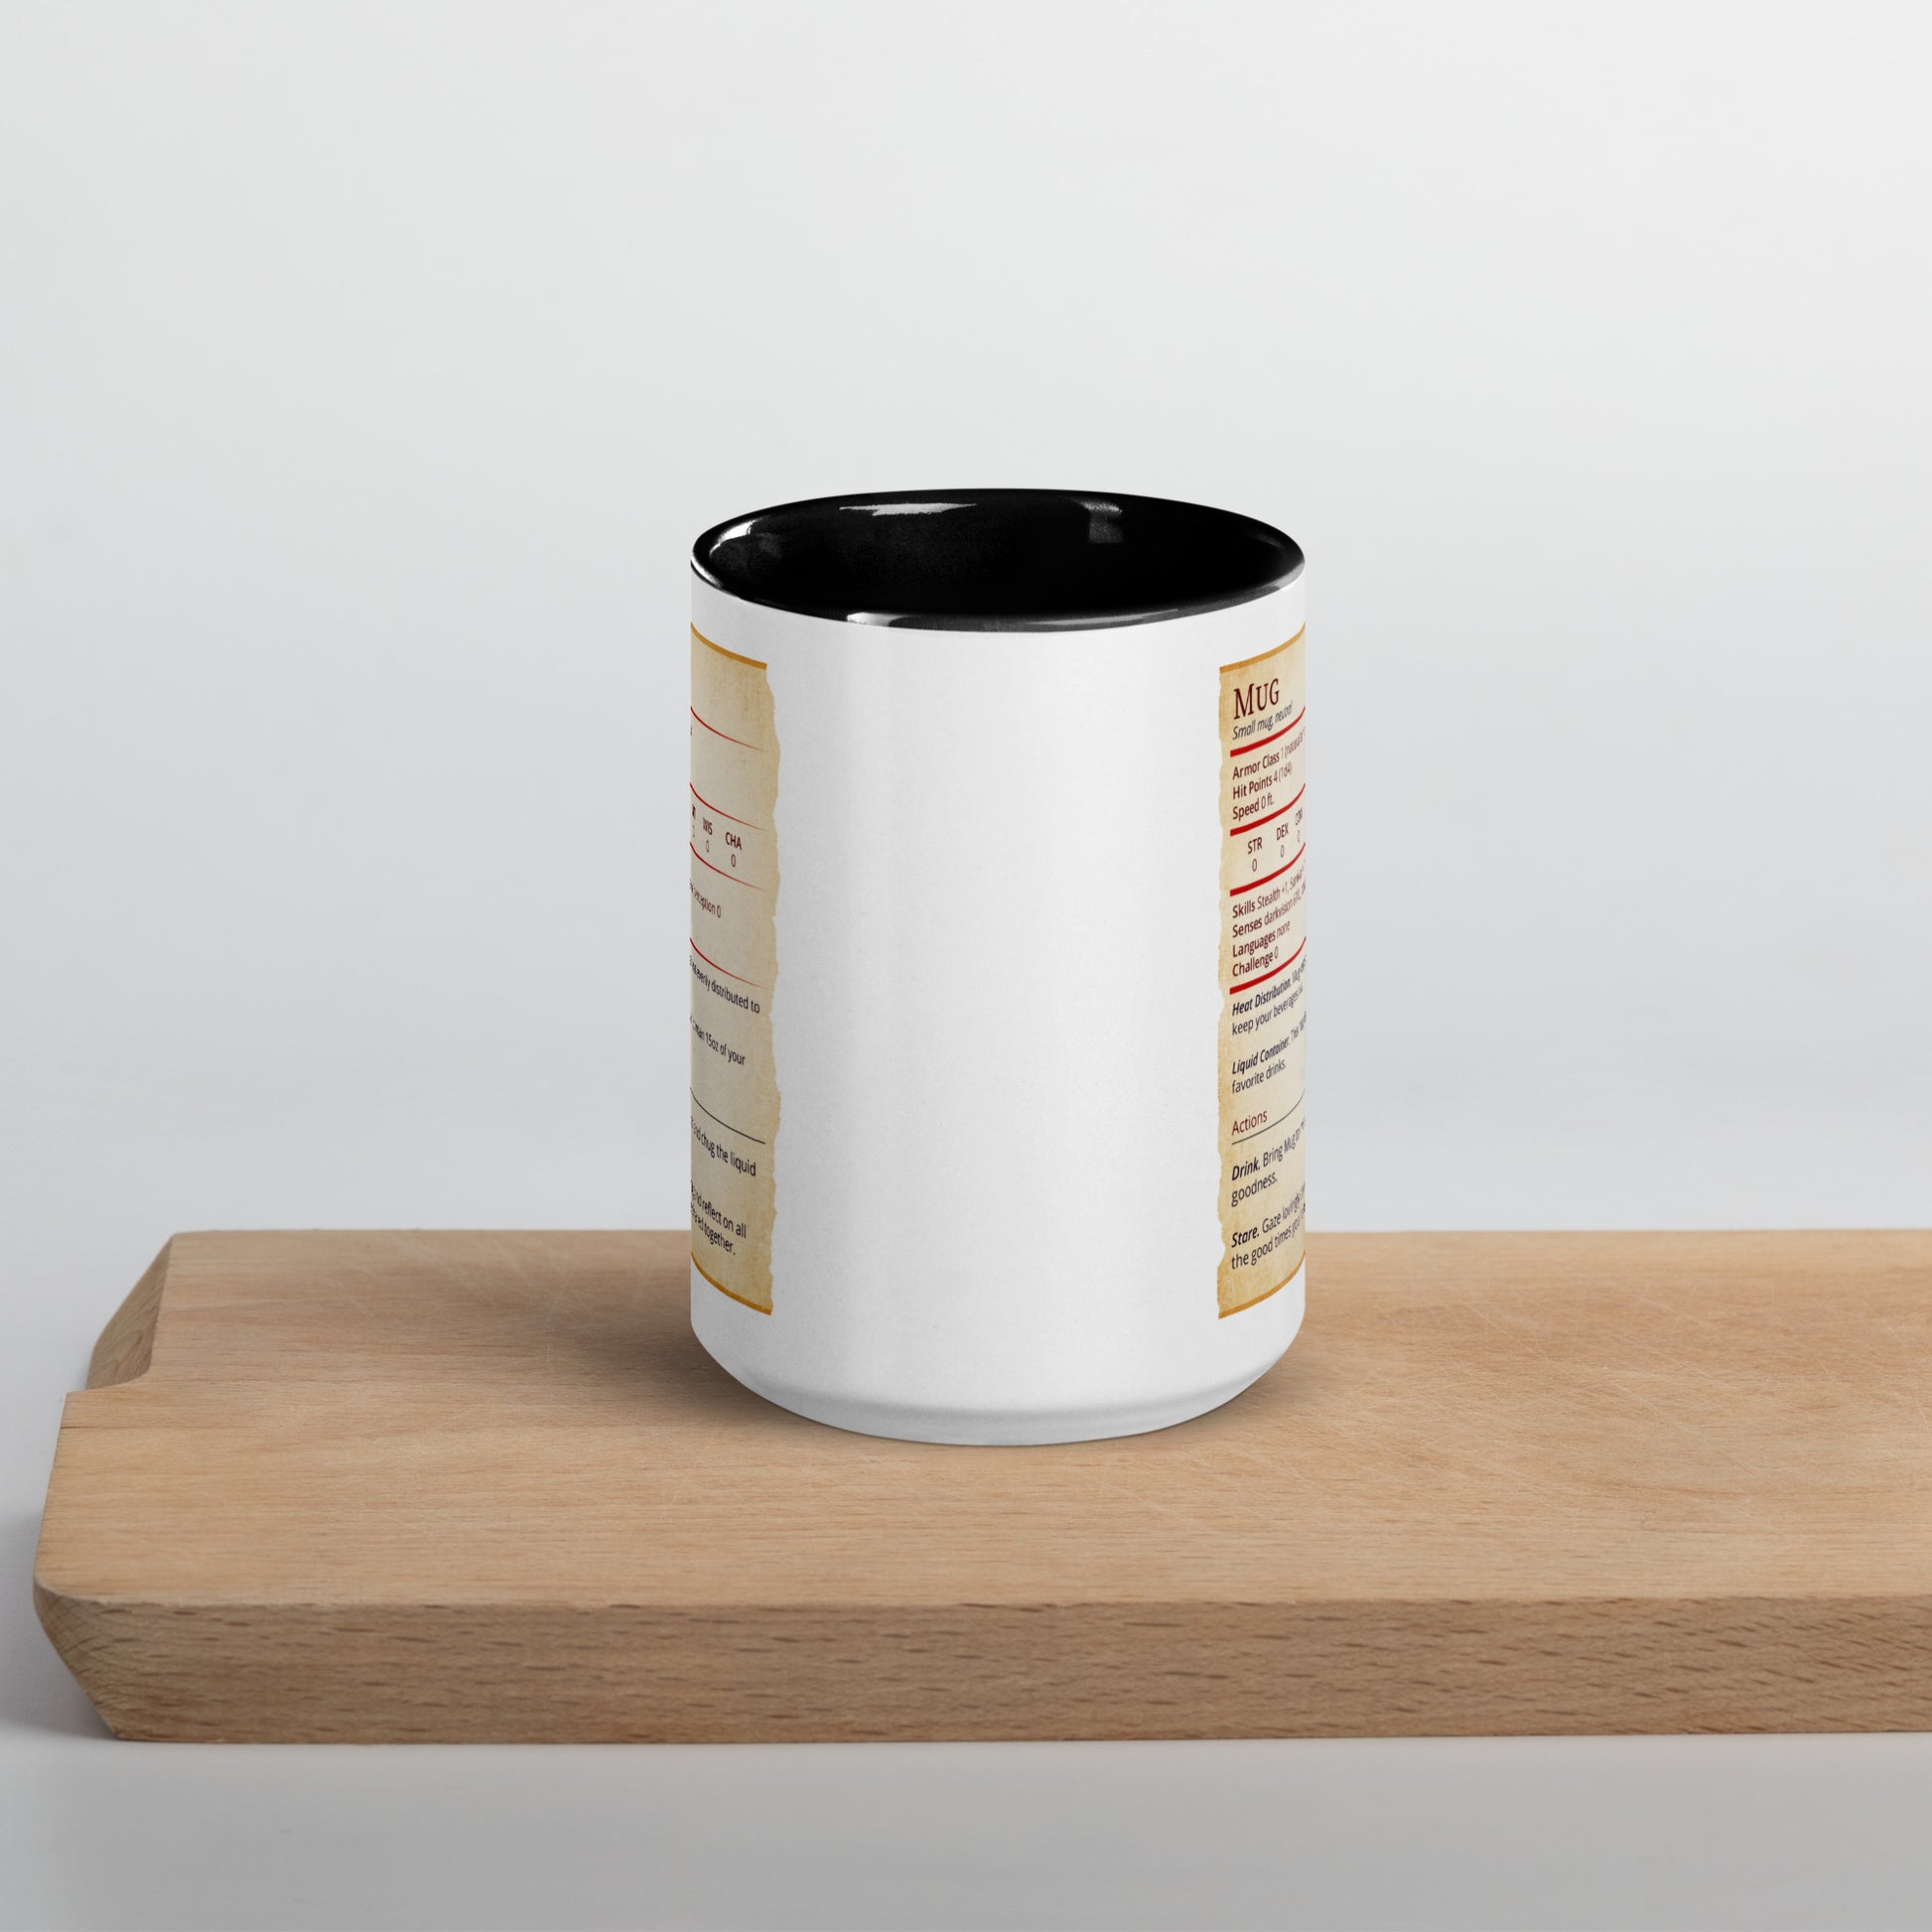 Wholesale 16 oz. Coffee Mug With Wood Lid | Coffee Mugs | Order Blank